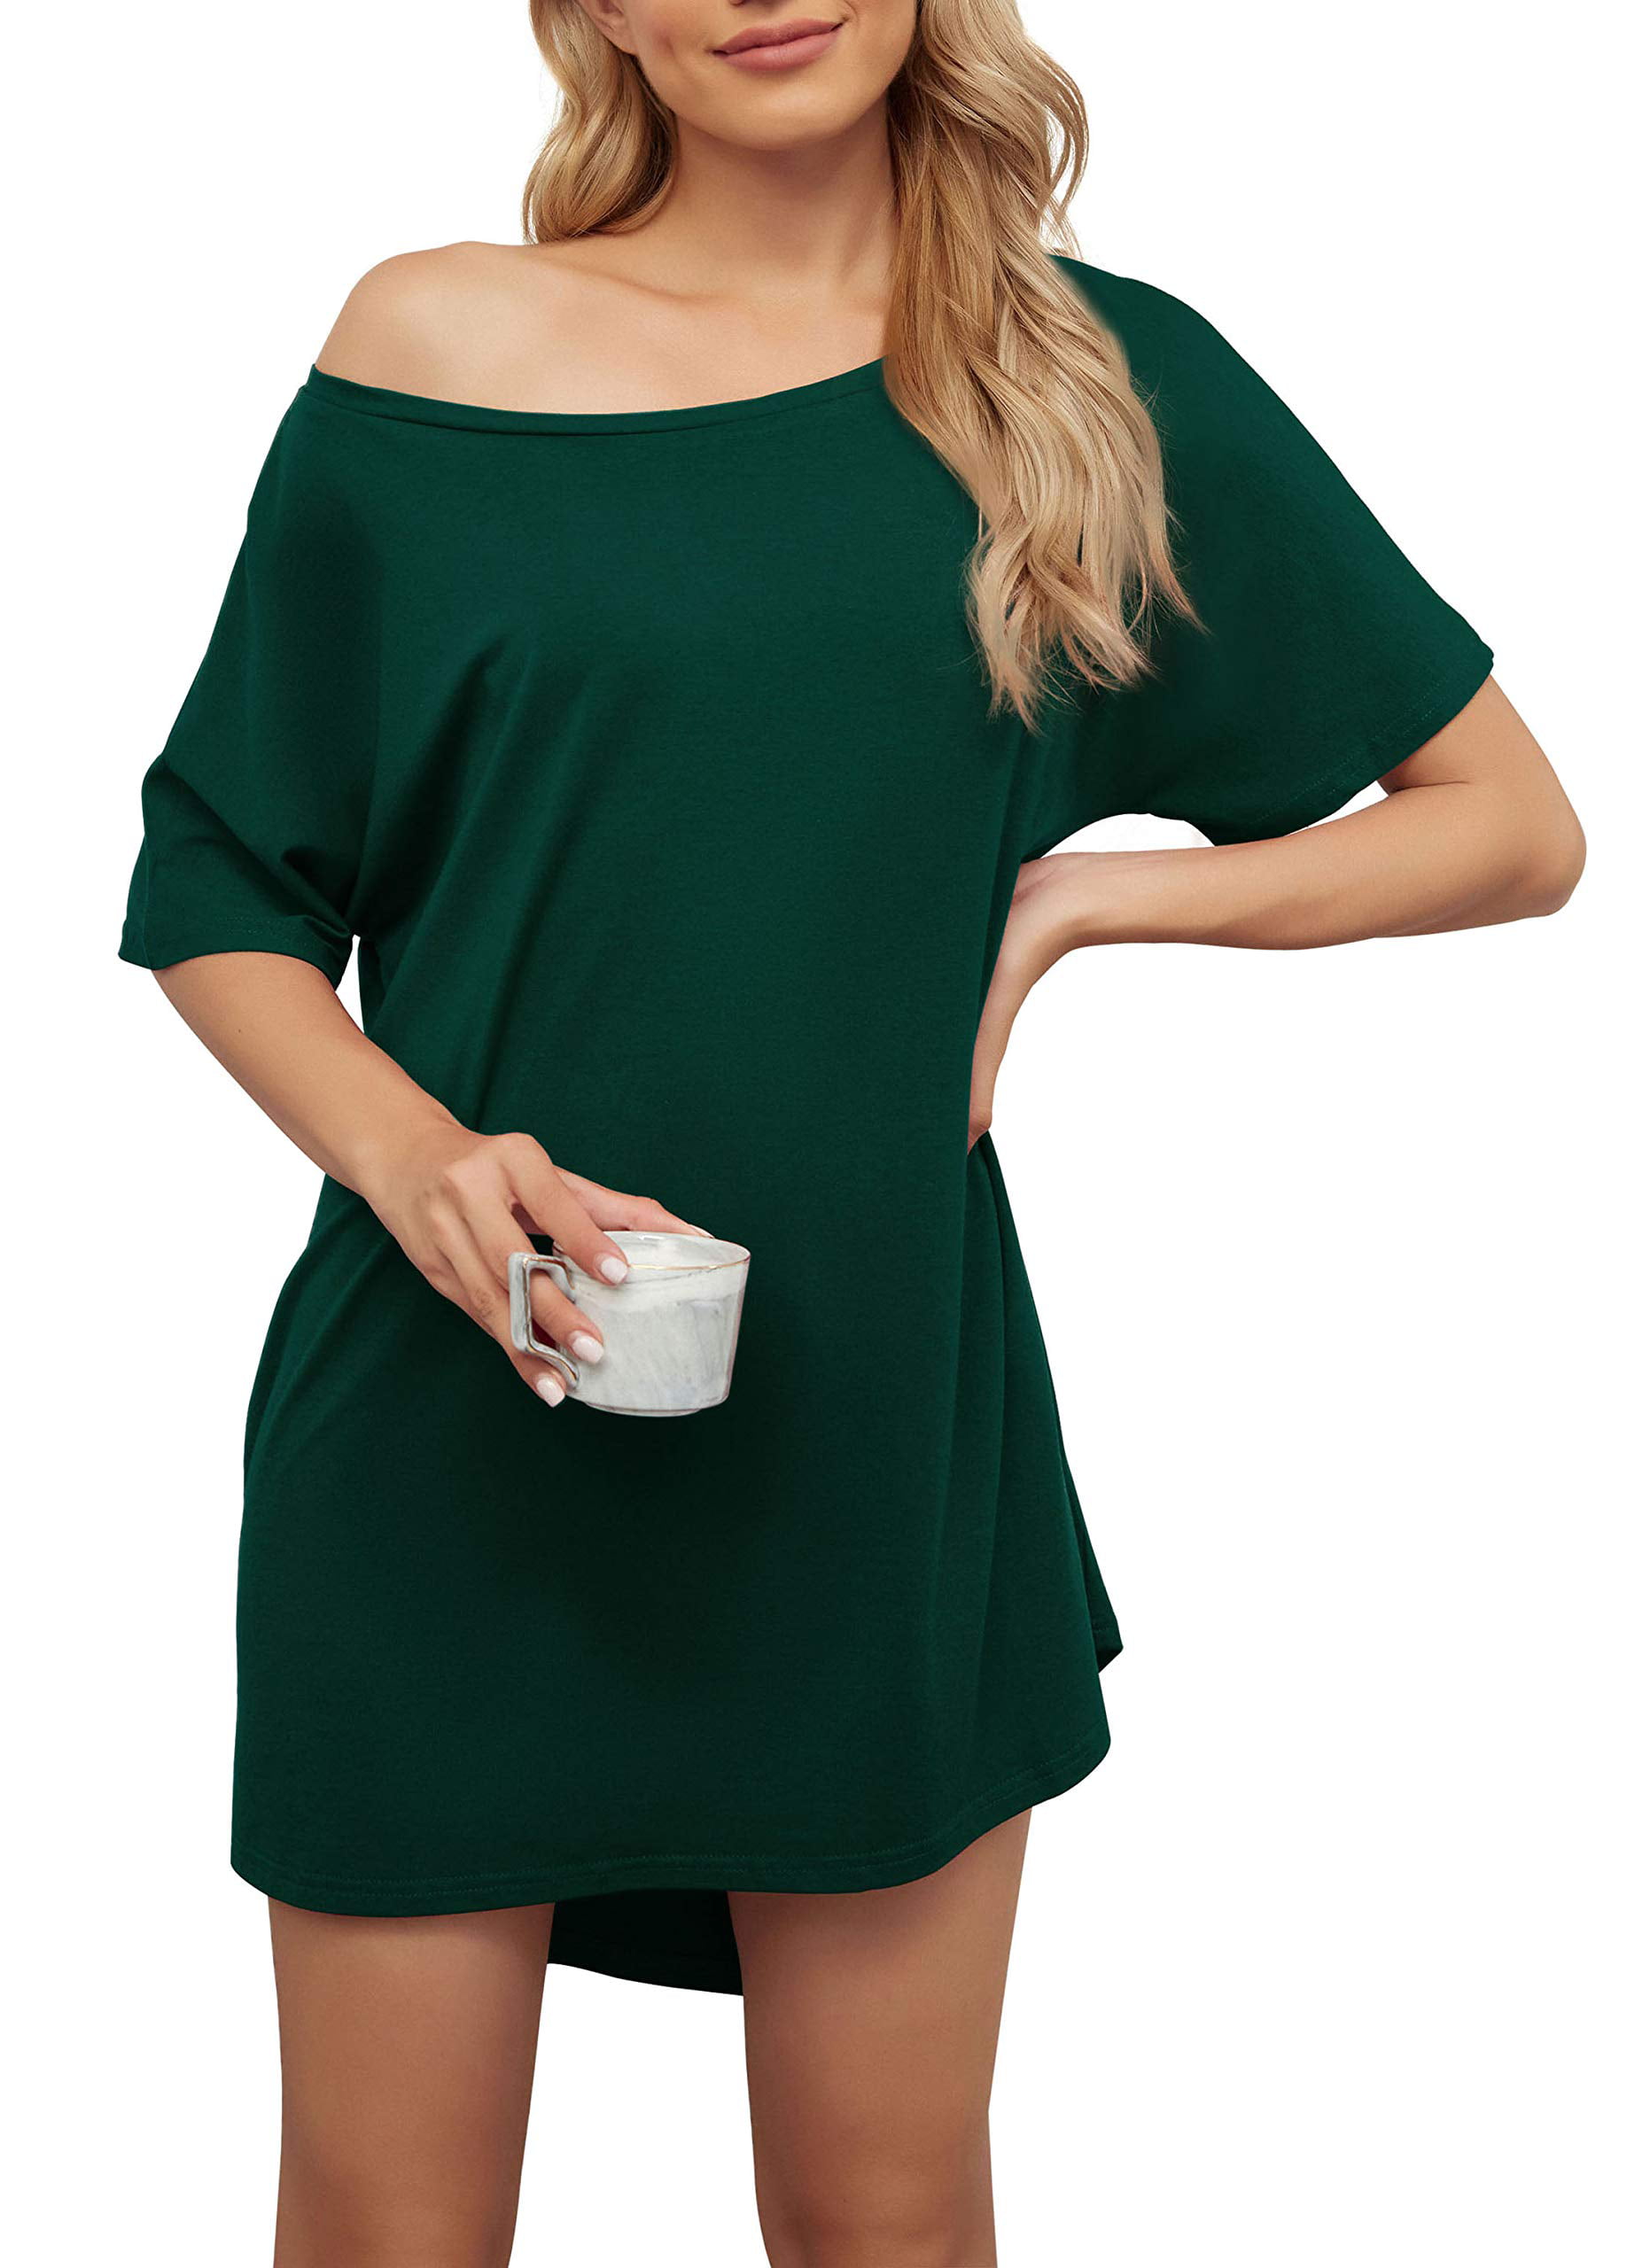 HIYIYEZI Women Loose T Shirts Home Short Shirt Mini Dresses Tops(Large,Dark  Green) - Walmart.com